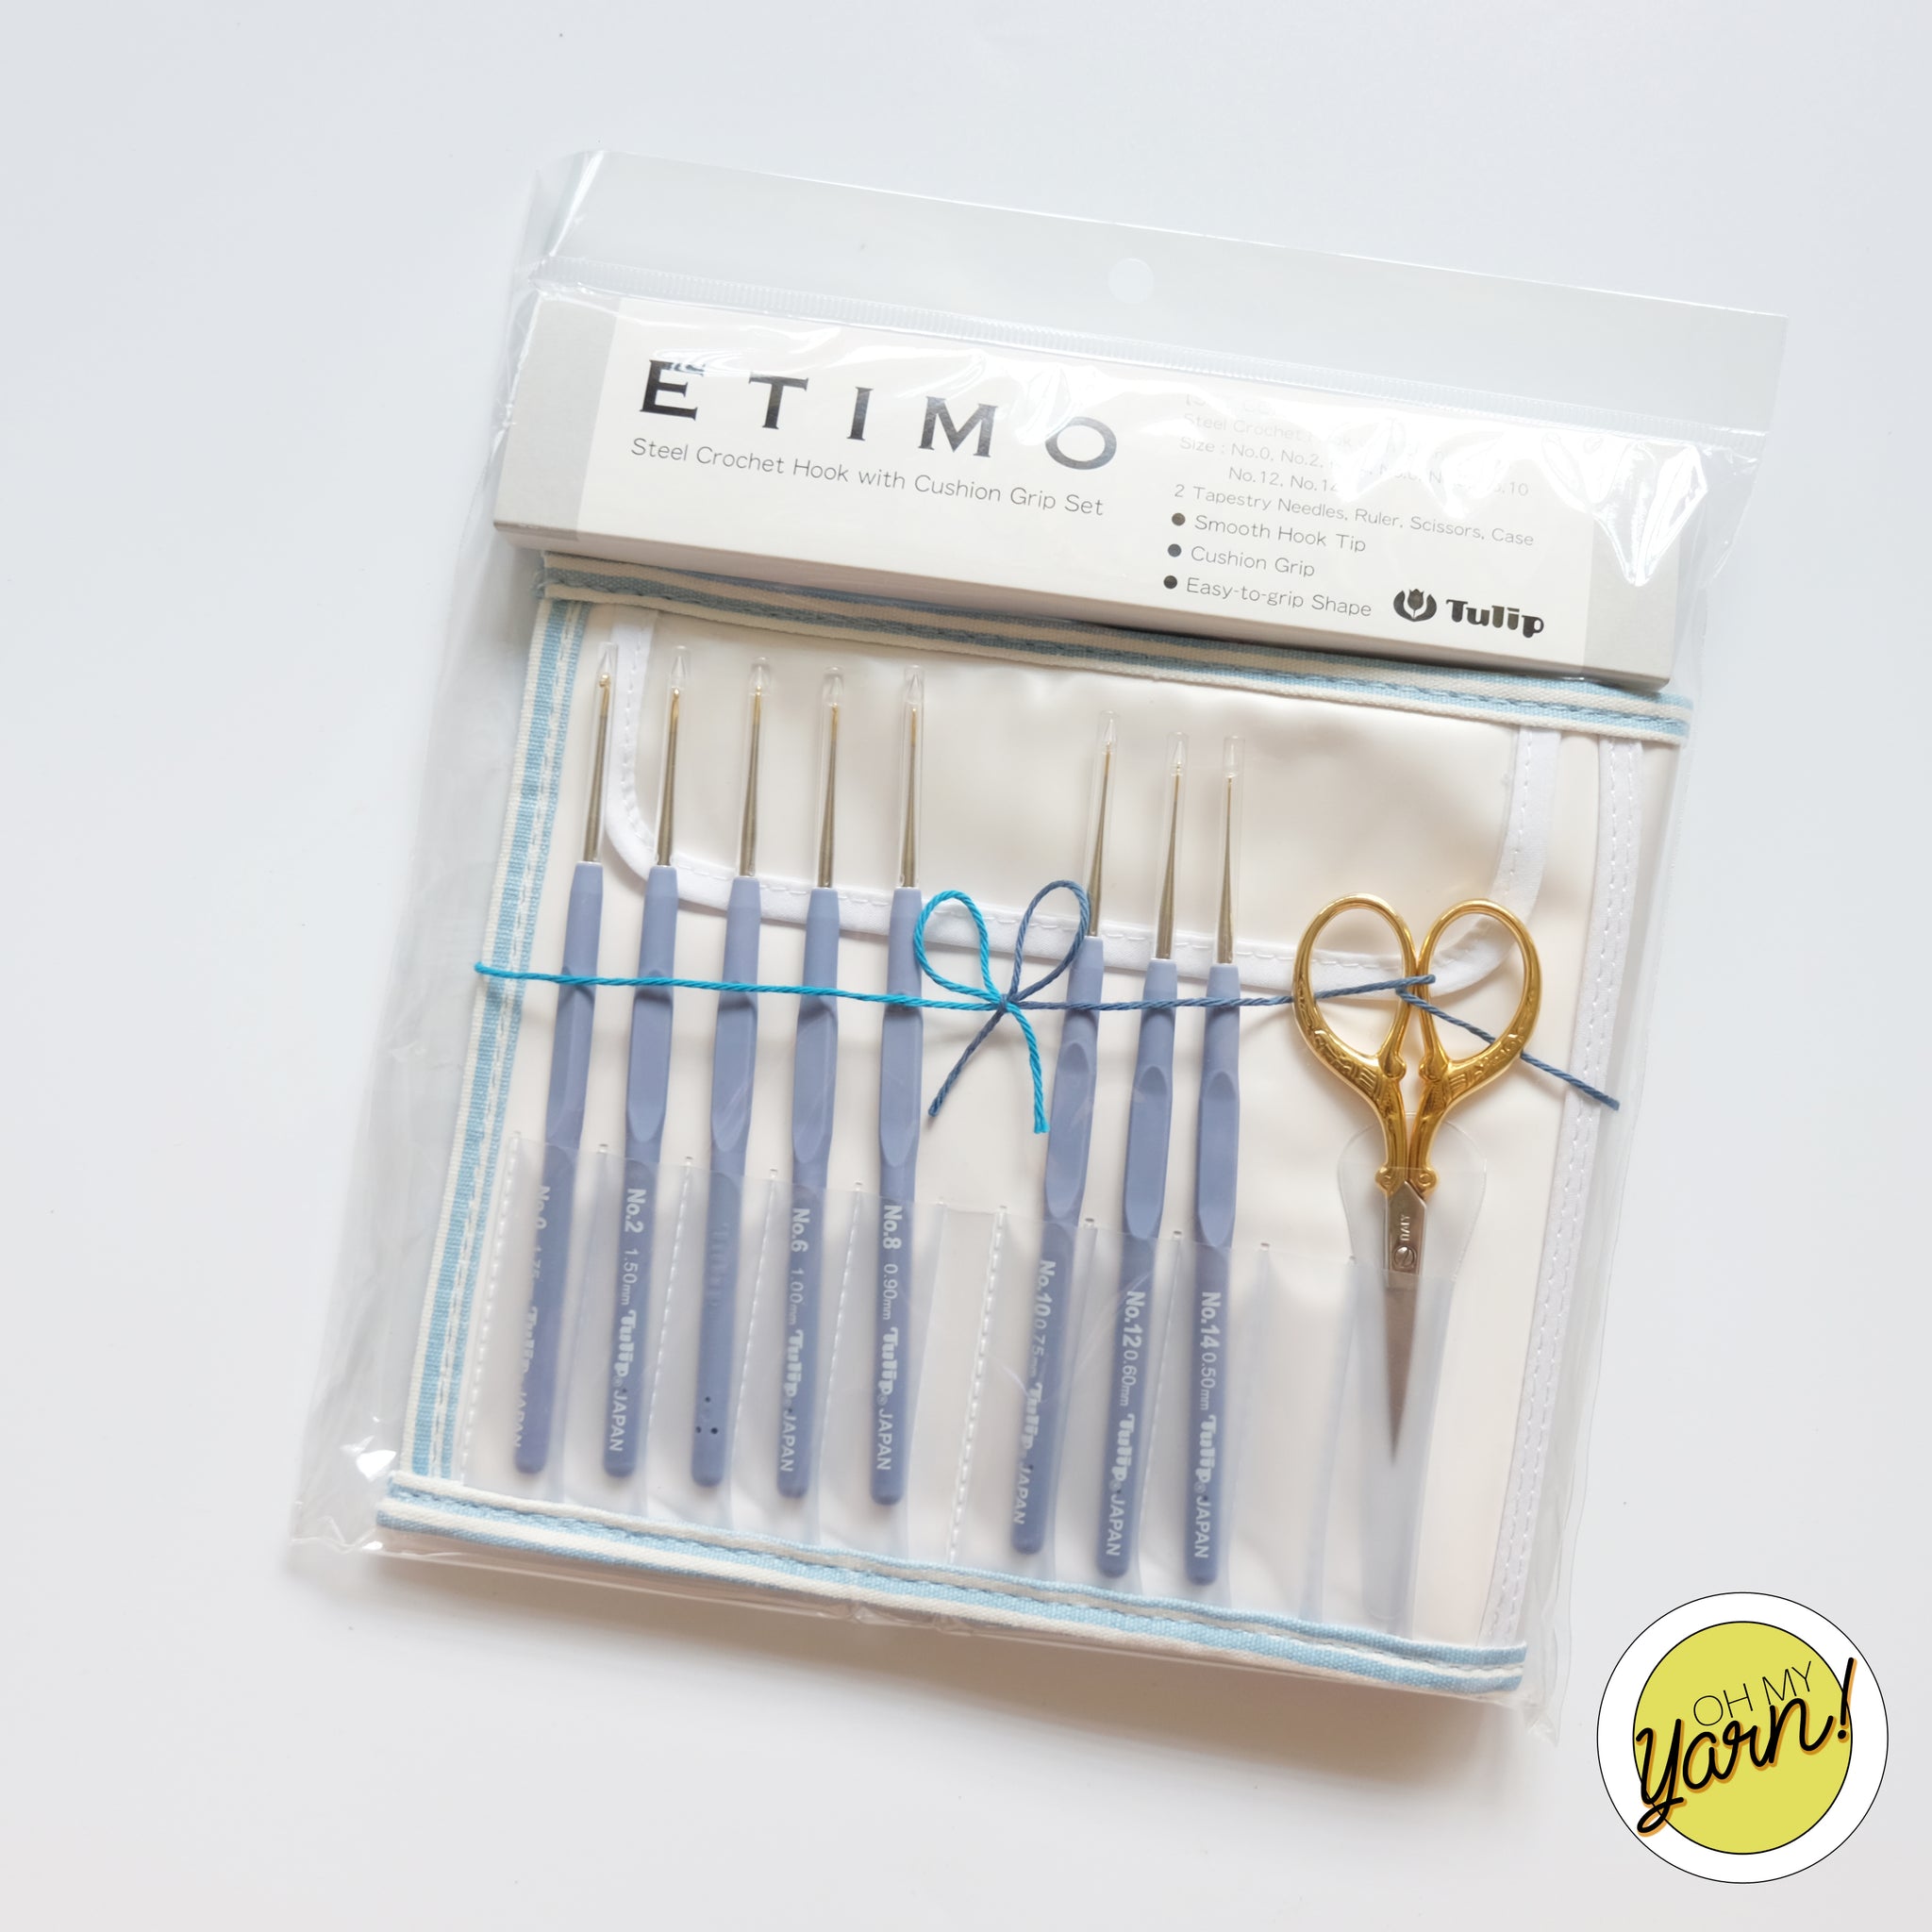 Tulip ETIMO Crochet Needle Set Premium Gold TEG-001 with Cute Case Fast  Shipping